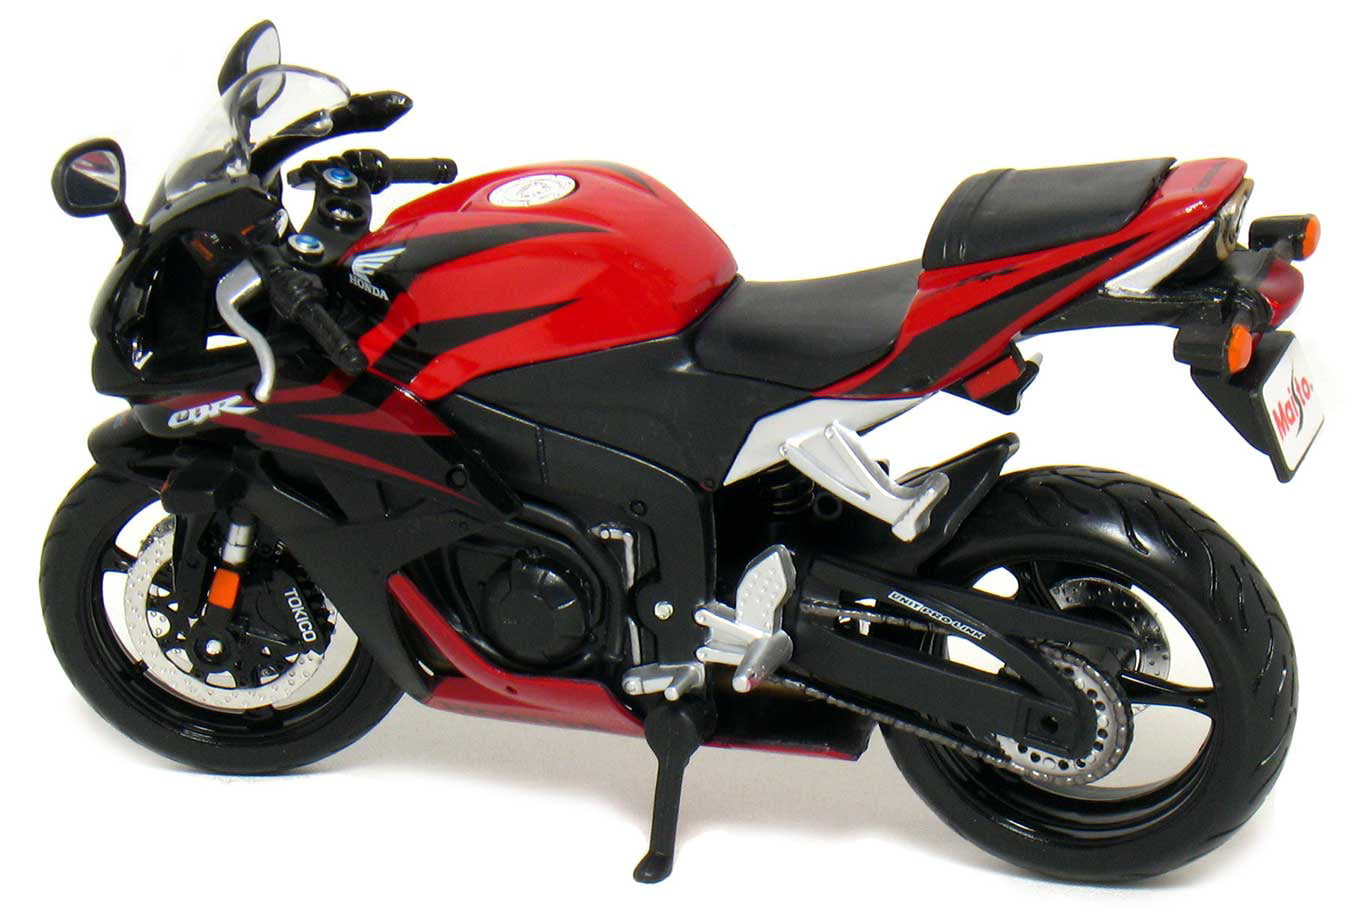 1/12 scale Maisto Honda CBR600RR Diecast model motorcycle replica sport bike toy